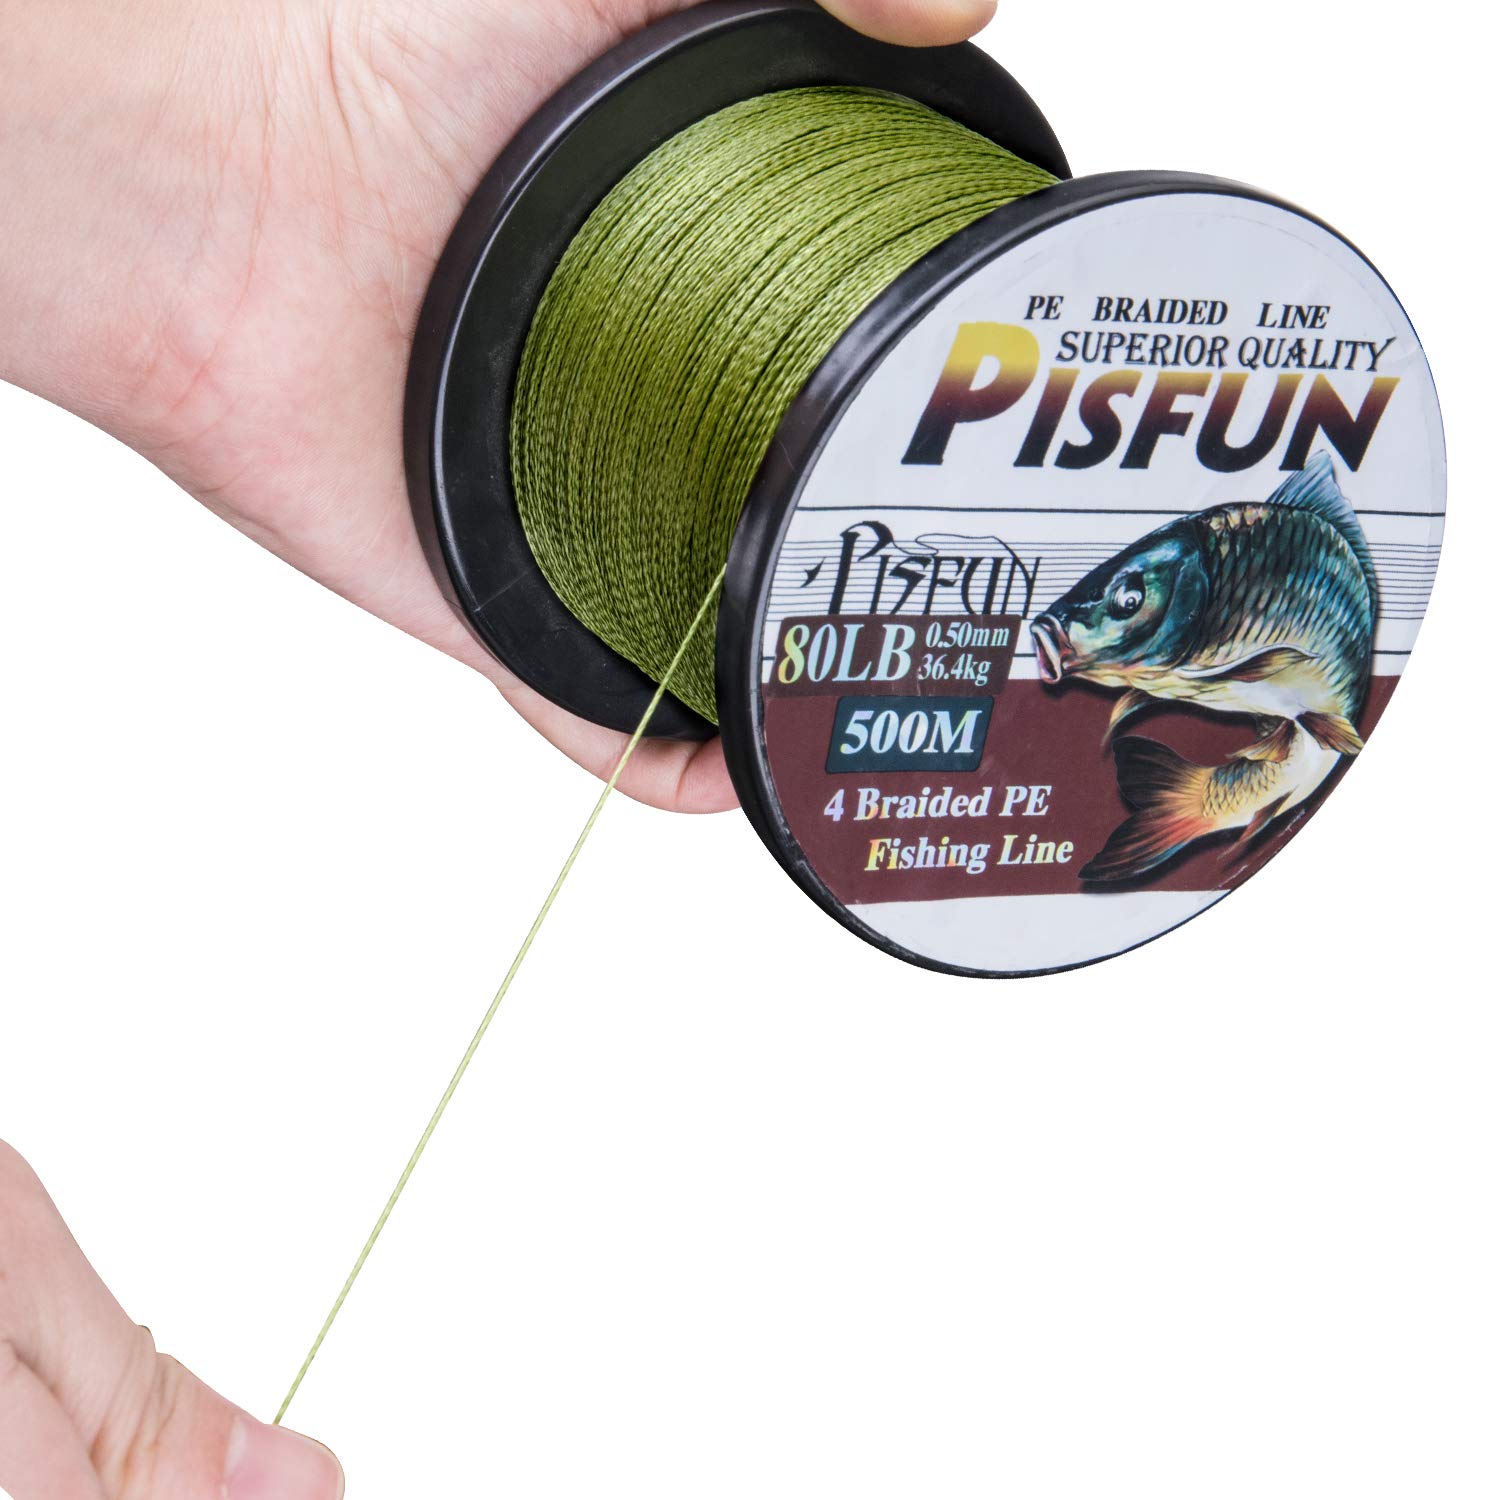 Pisfun Brand 4X Braided Fishing Line 500M Strong Multifilament